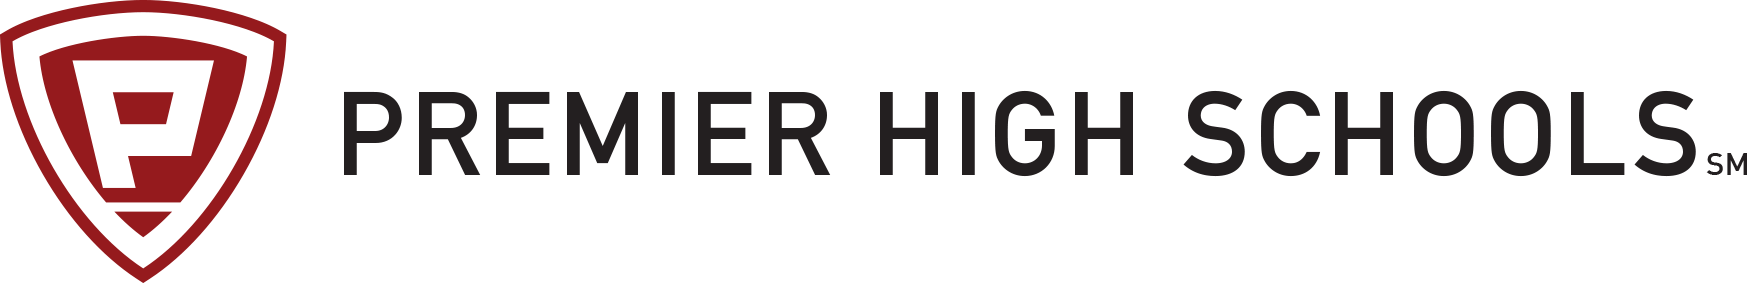 High School S Logo - Premier High Schools – Don't Wait. Graduate.